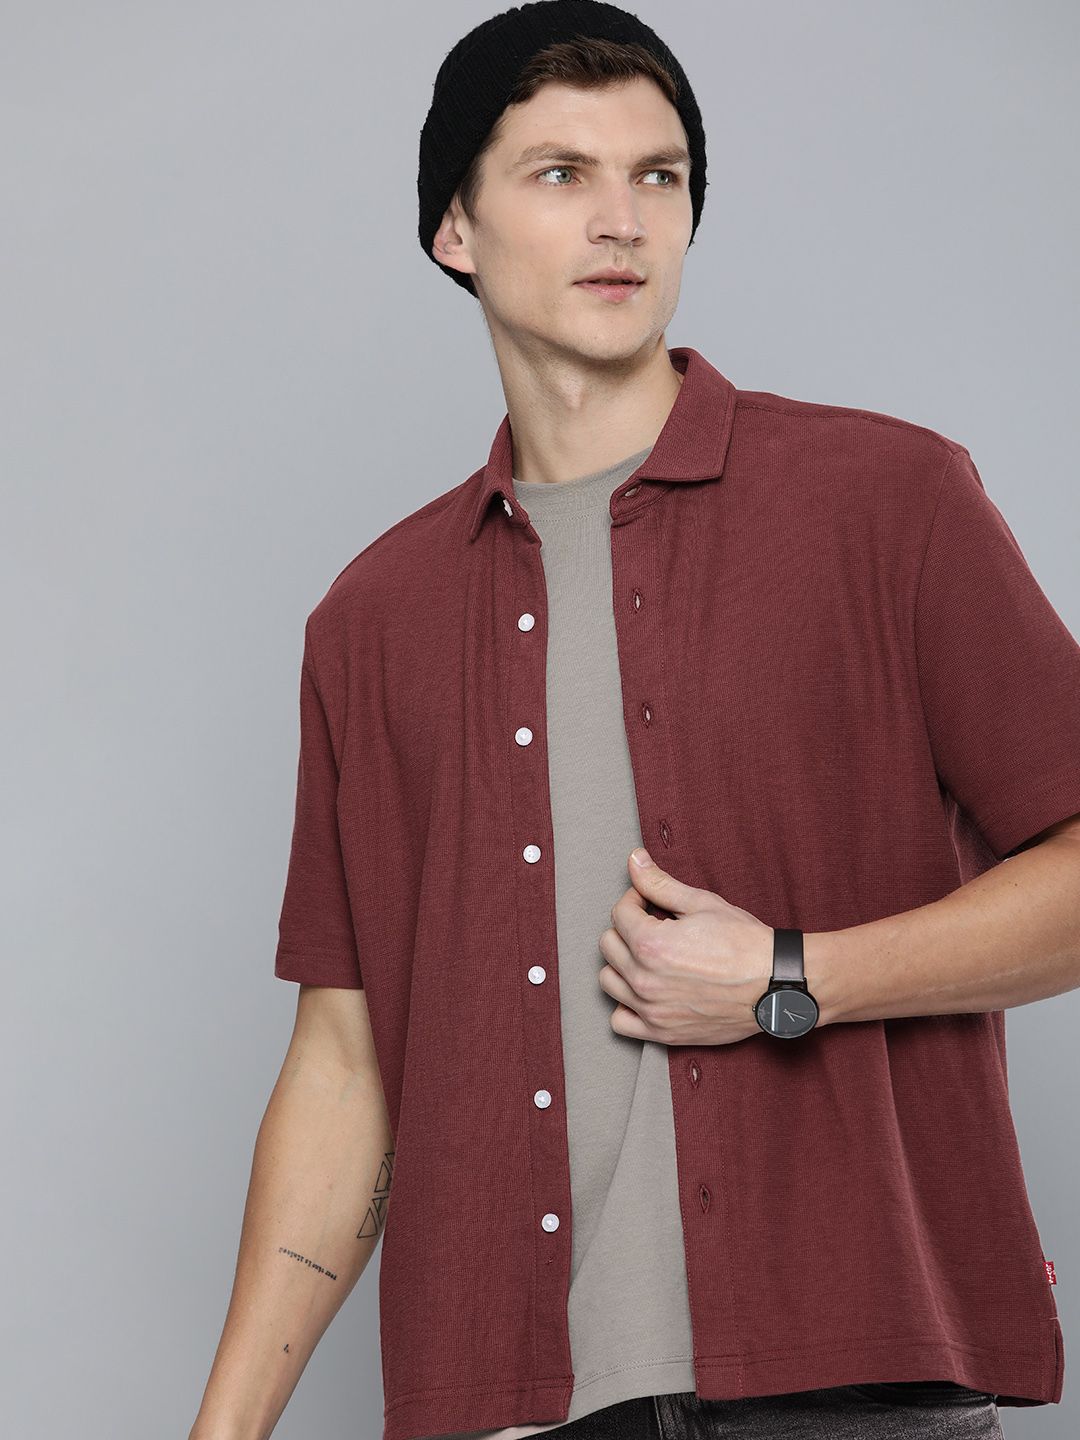 Levis Self Design Slim Fit Textured Casual Shirt